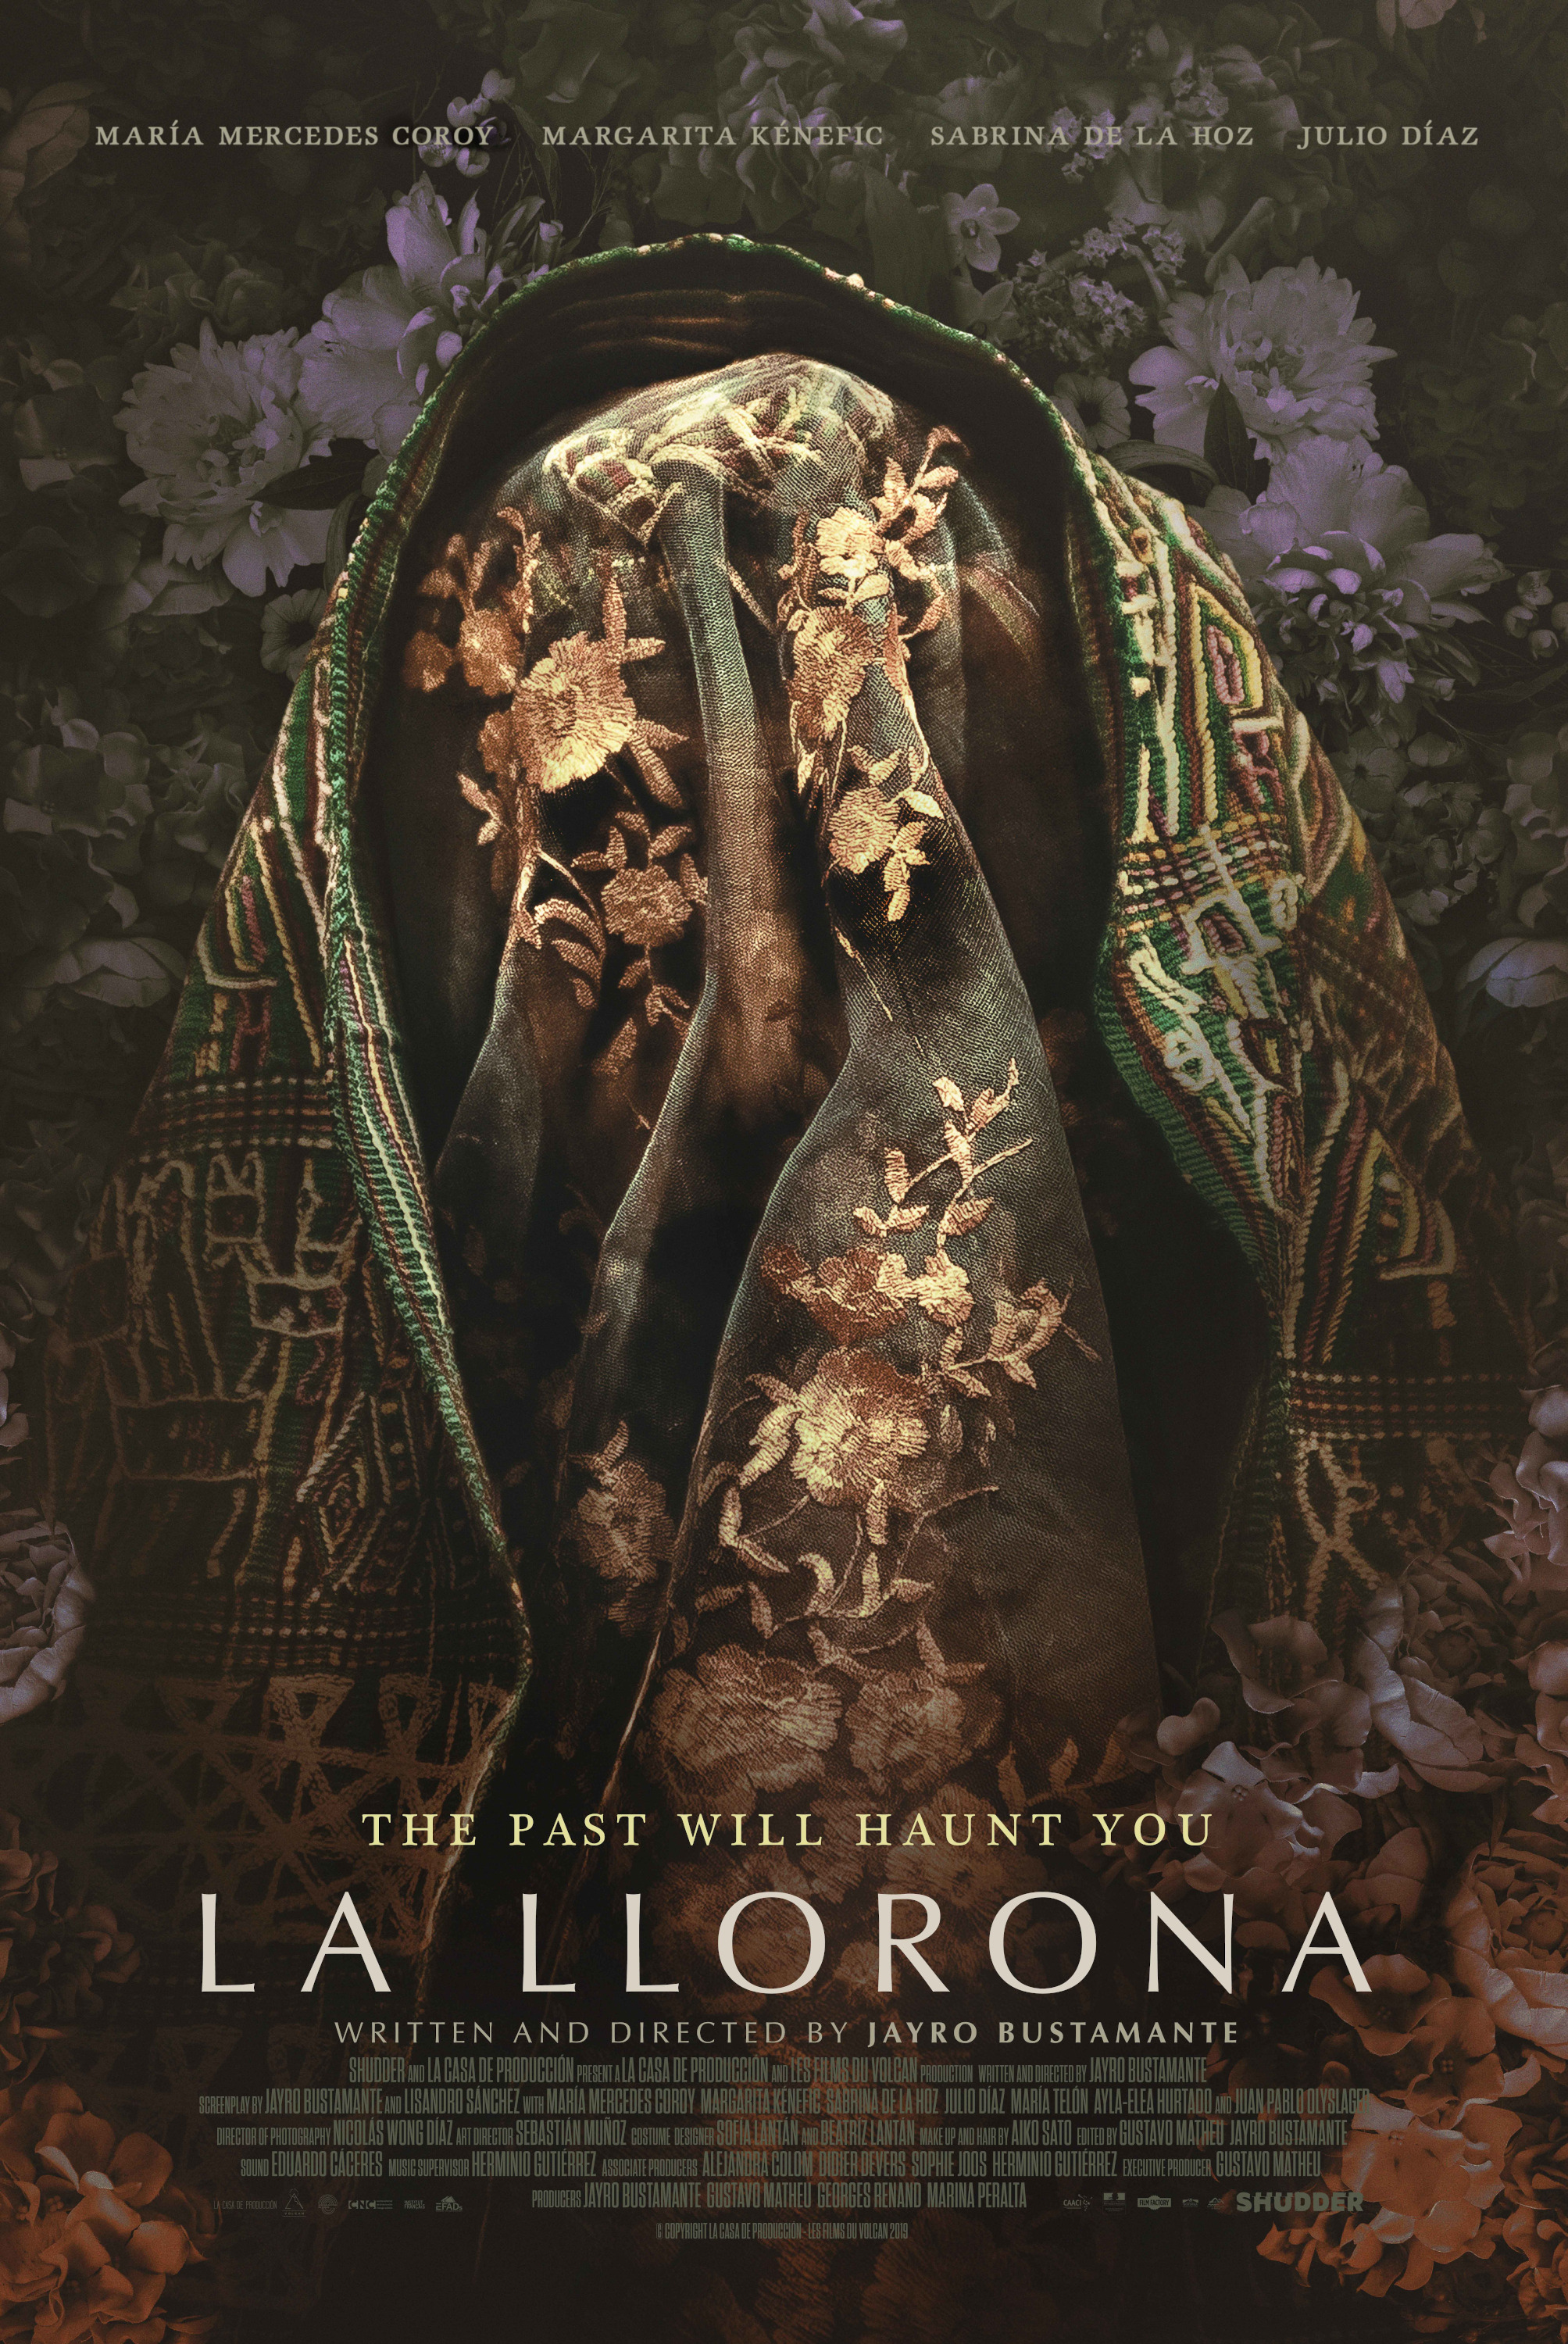 Mega Sized Movie Poster Image for La llorona (#2 of 2)